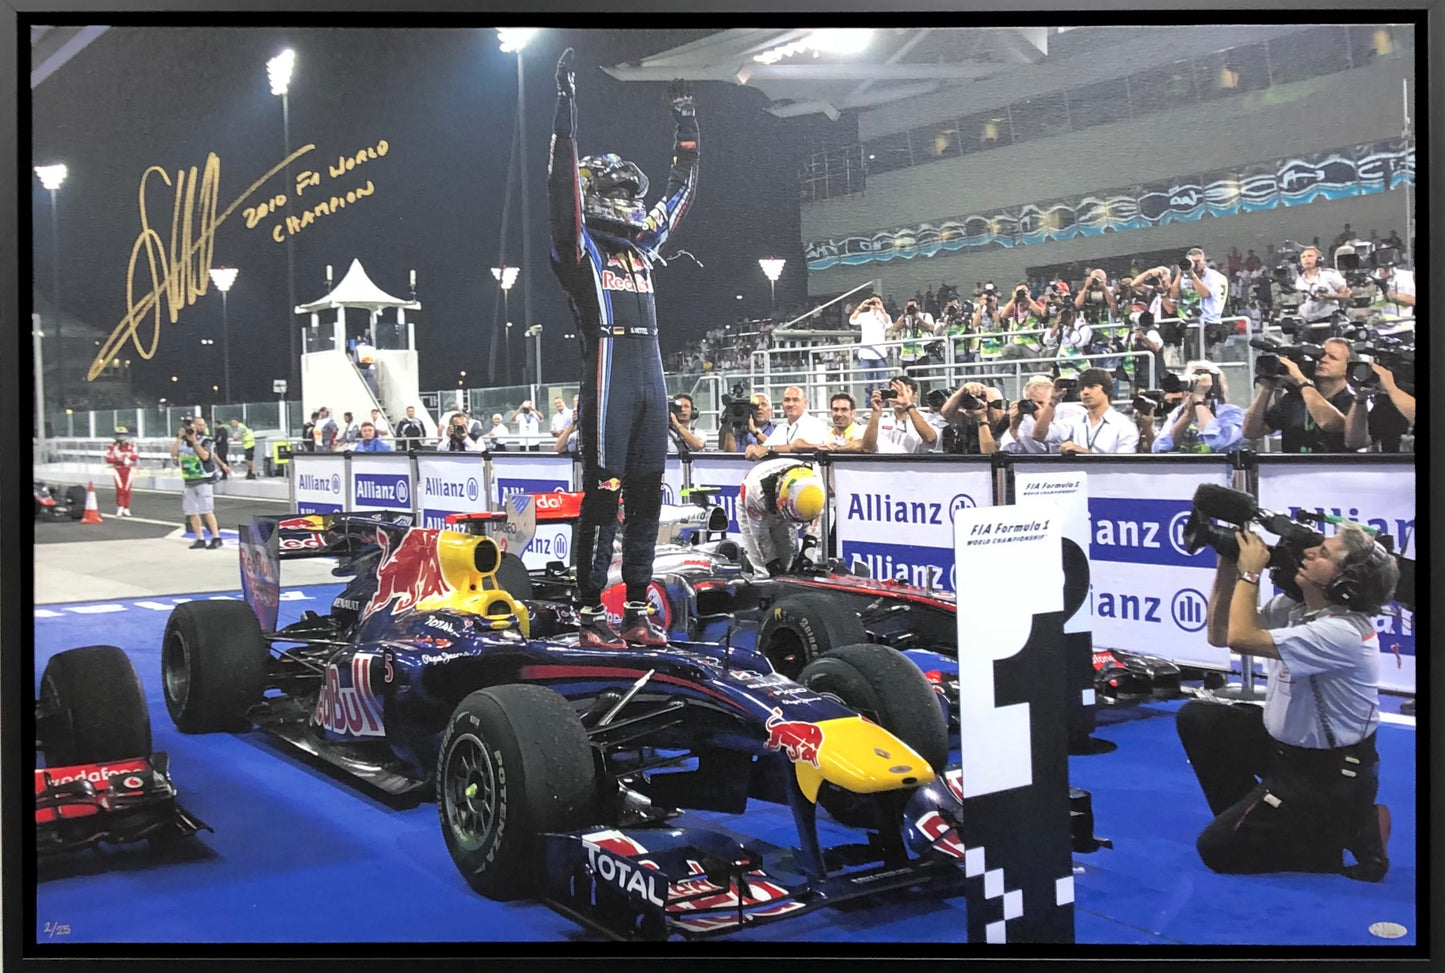 [PRE-ORDER] Minichamps 1:43 F1 (2010) Red Bull Racing RB6 Sebastian Vettel Abu Dhabi Grand Prix World Championship Car